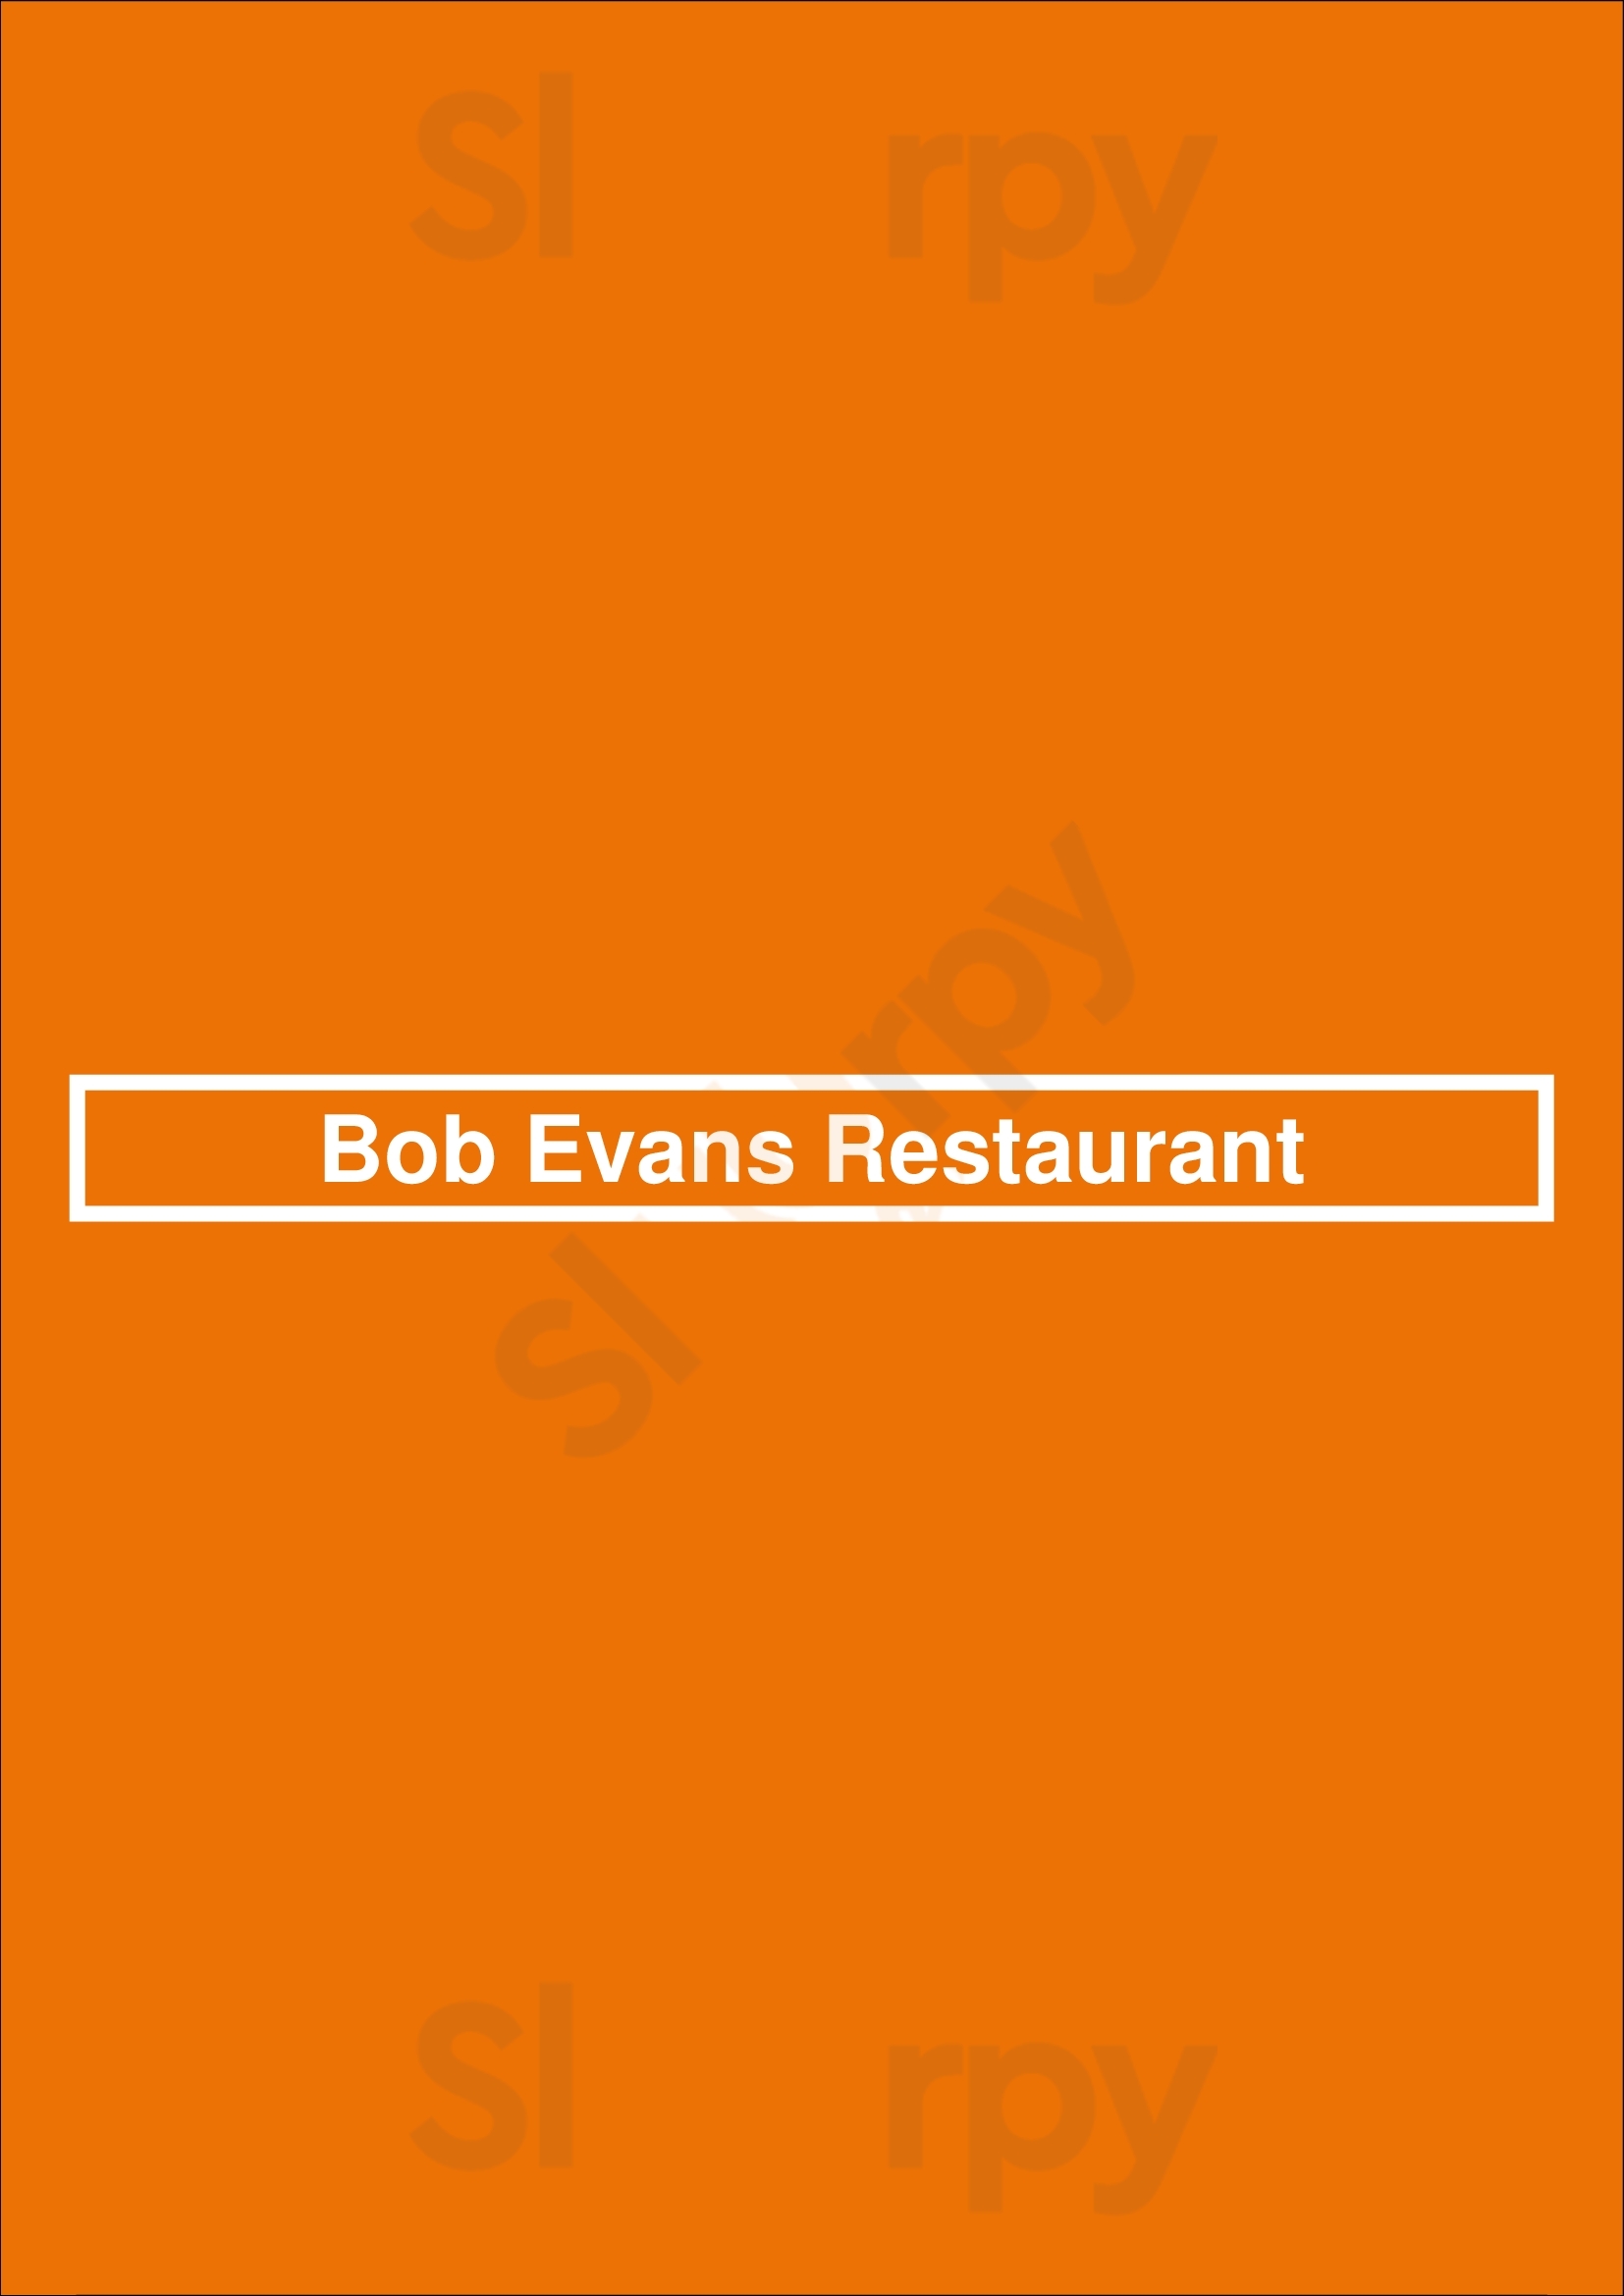 Bob Evans Restaurant Charlotte Menu - 1